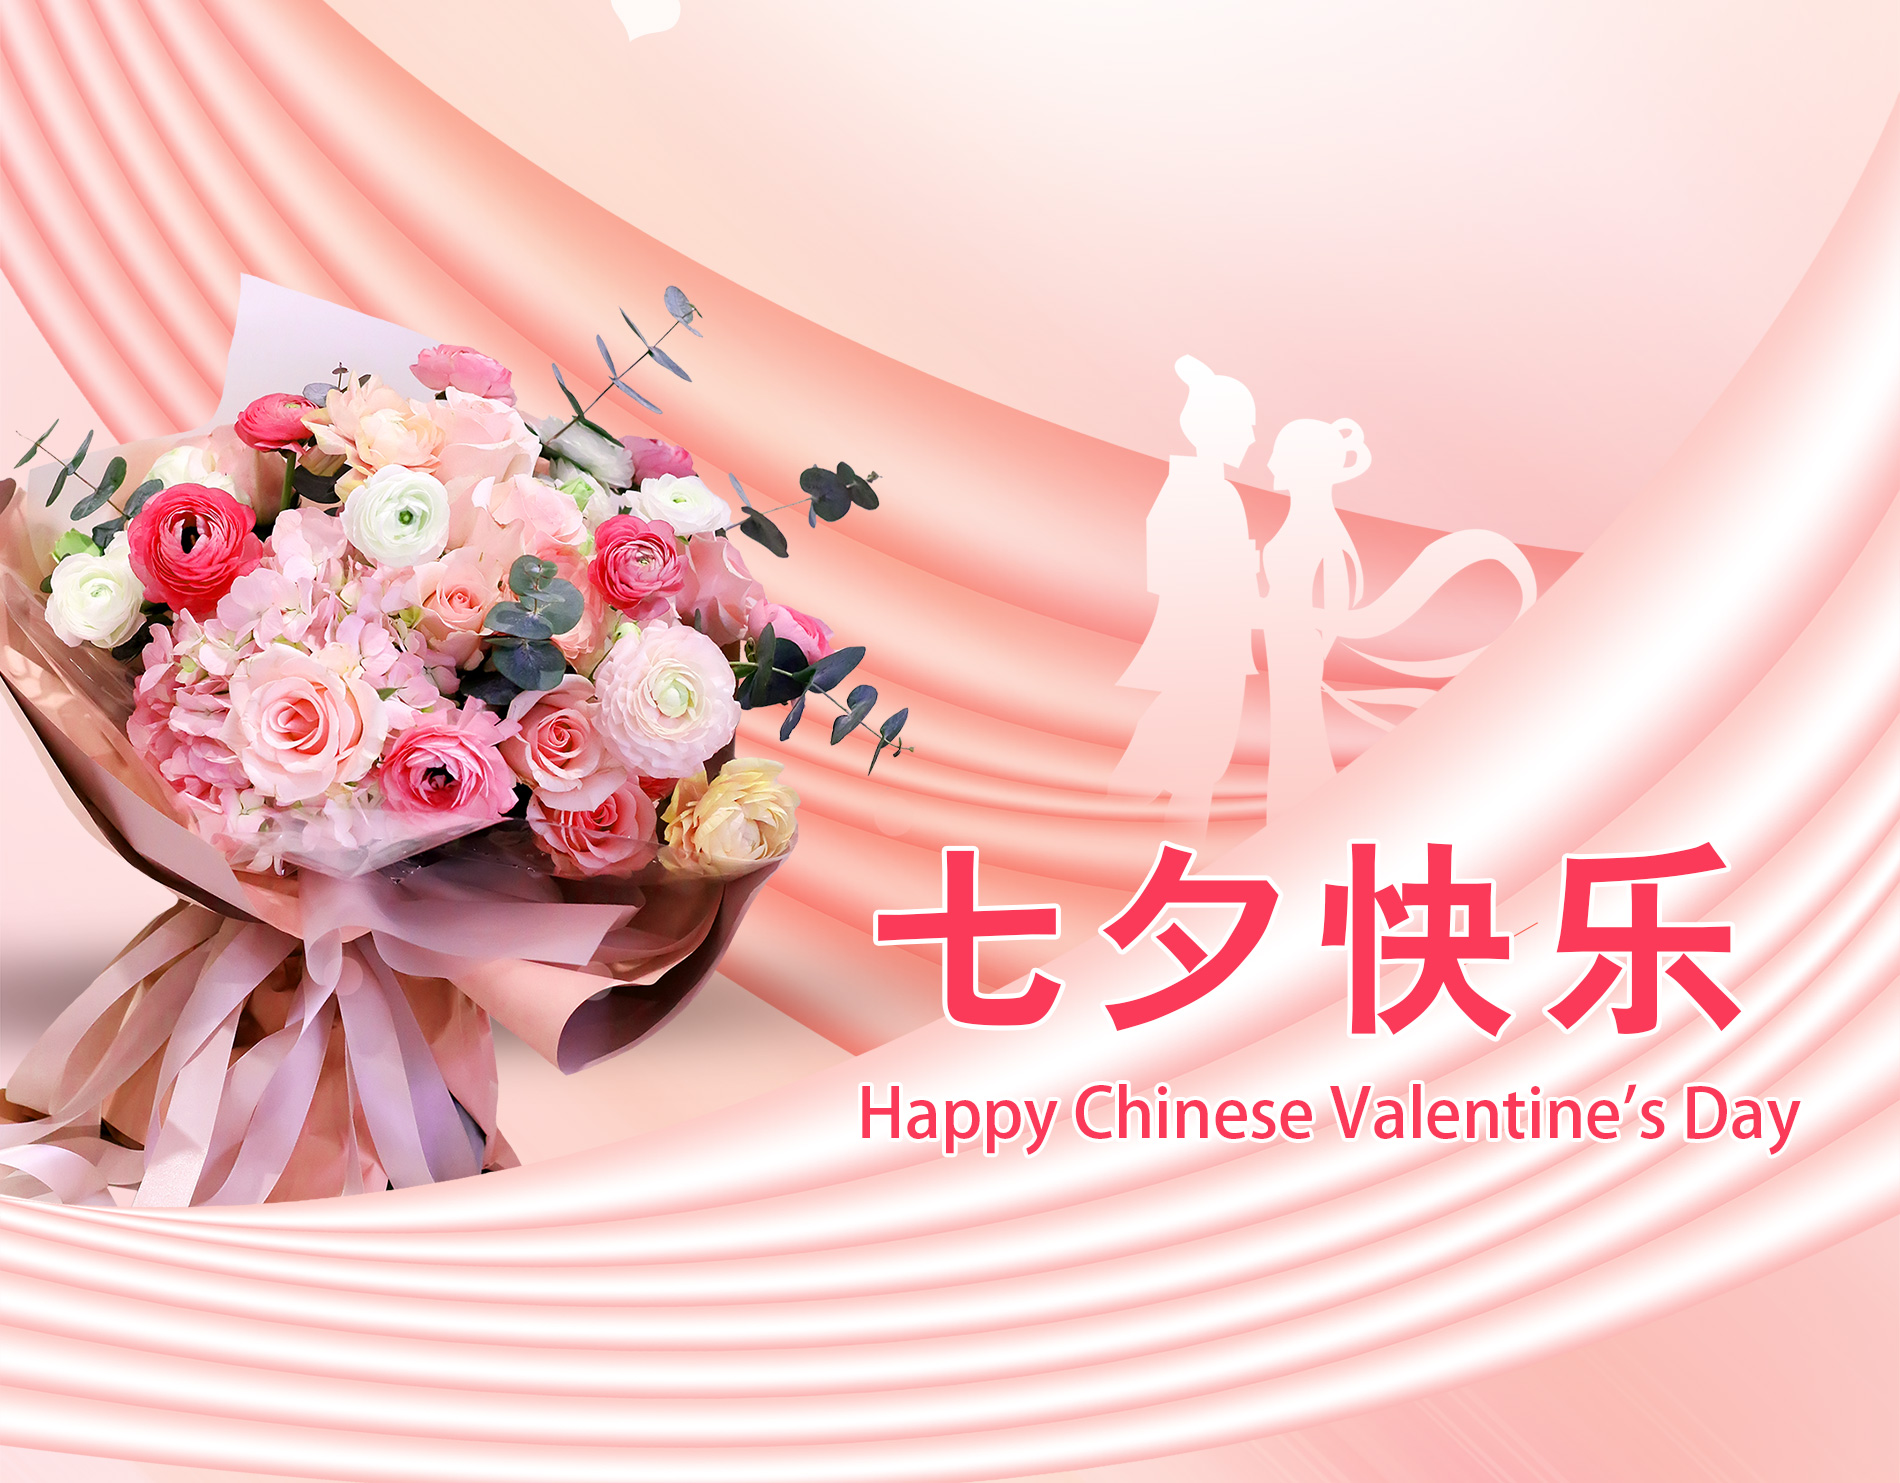 Happy Chinese Valentine's Day!